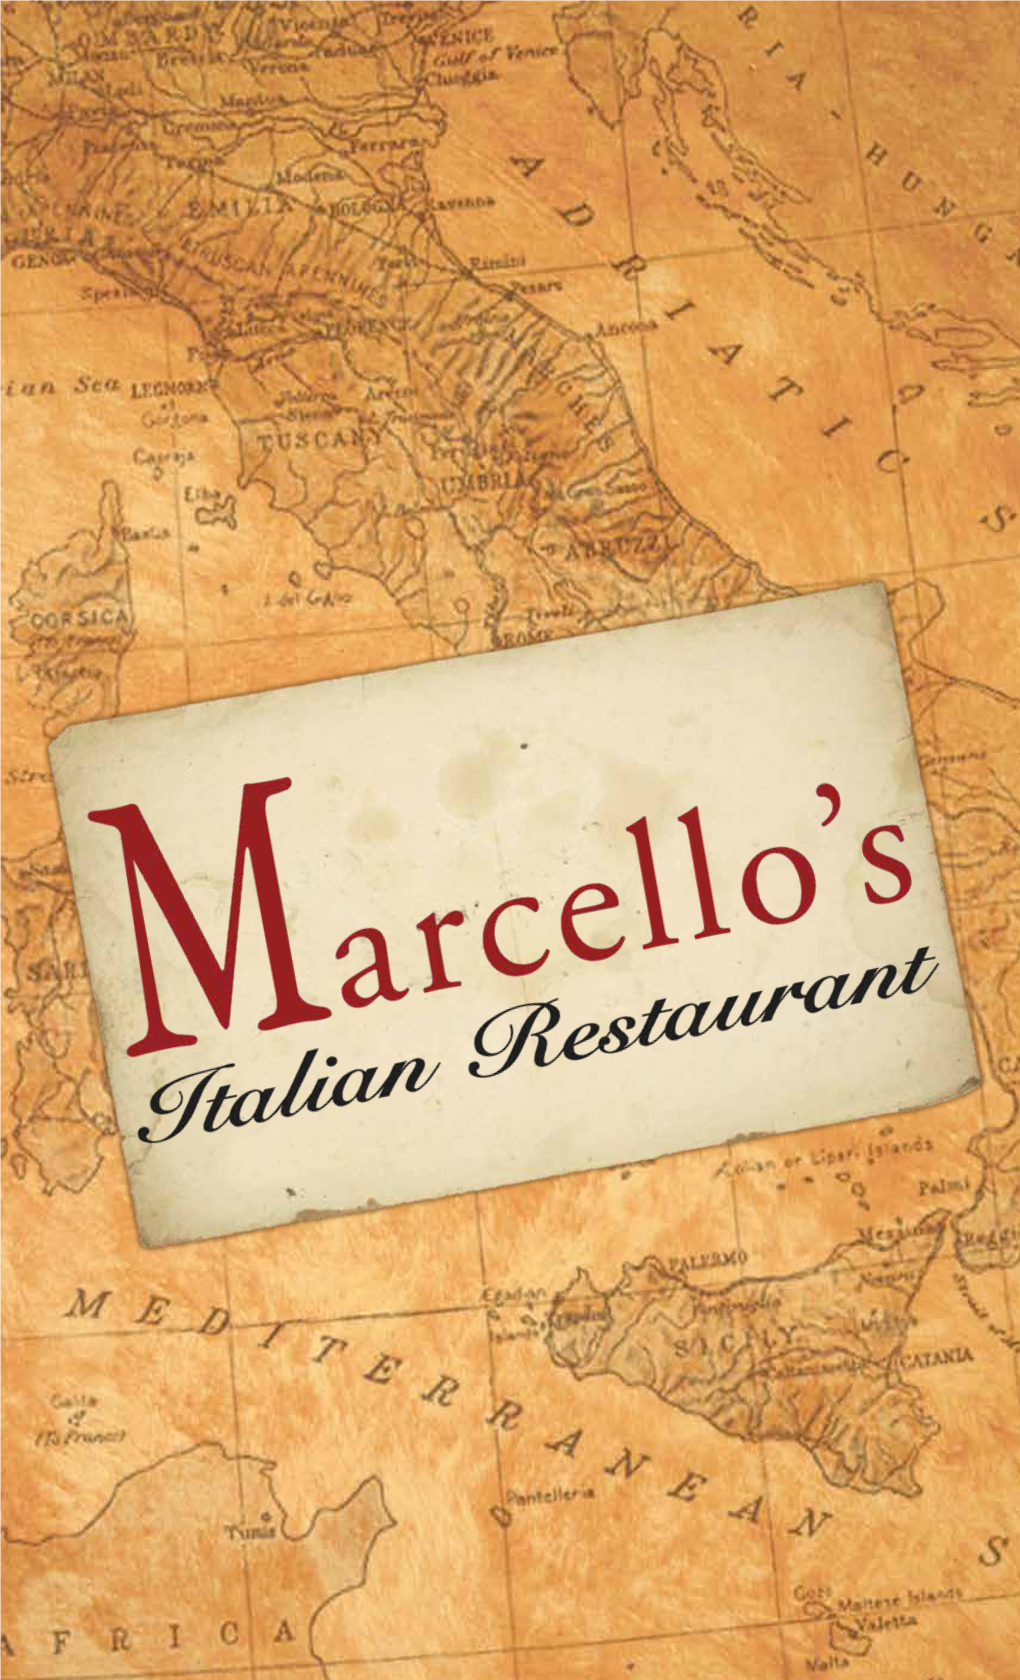 Marcellos Restaurant Menu